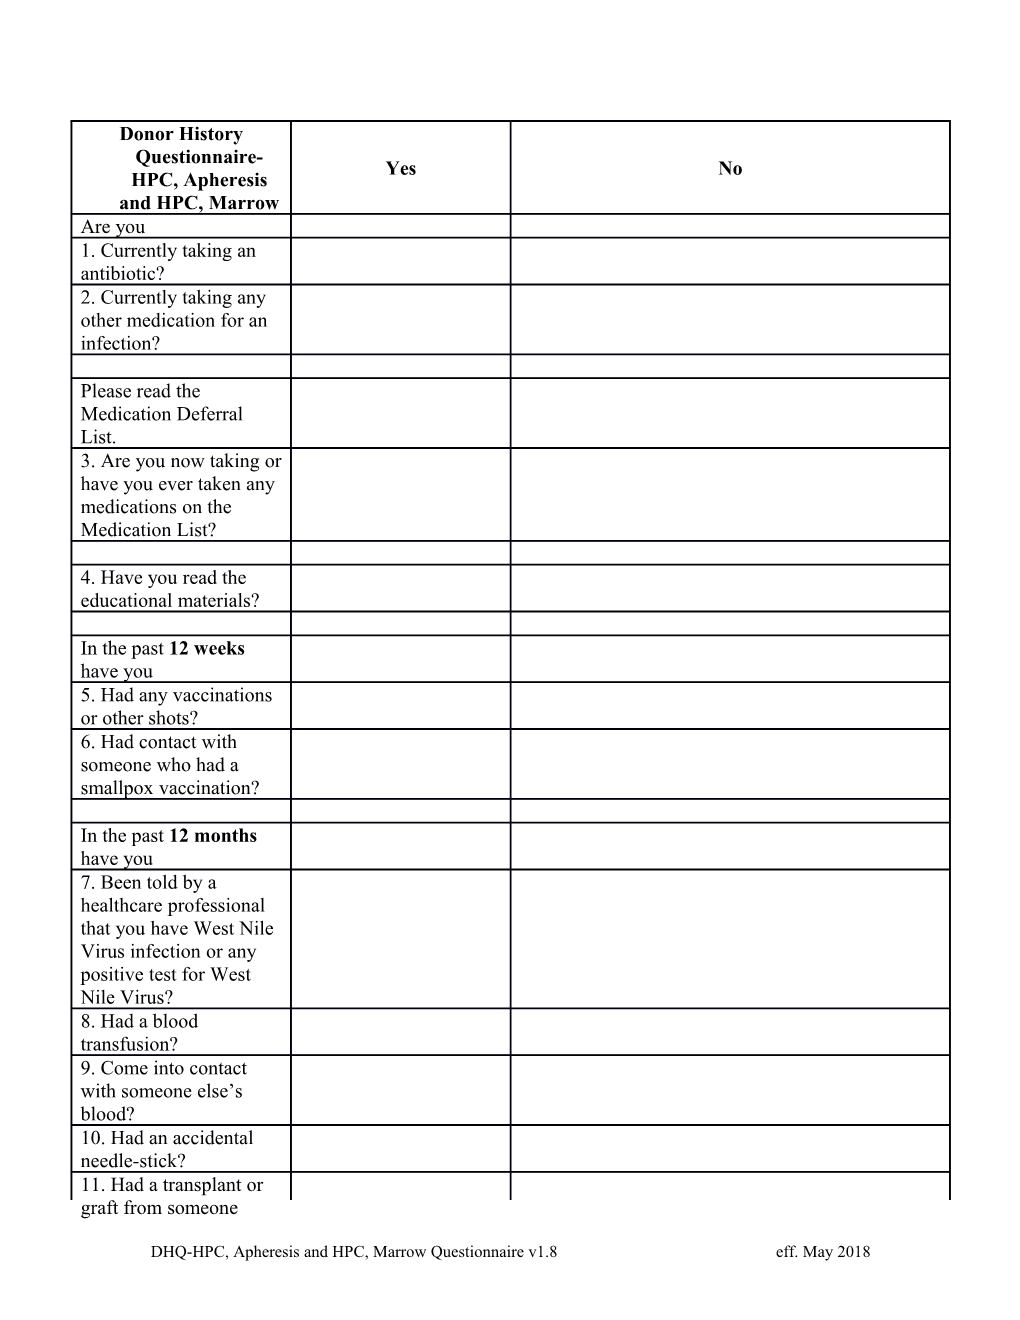 HPC, Apheresis and HPC, Marrow DHQ Questionnaire